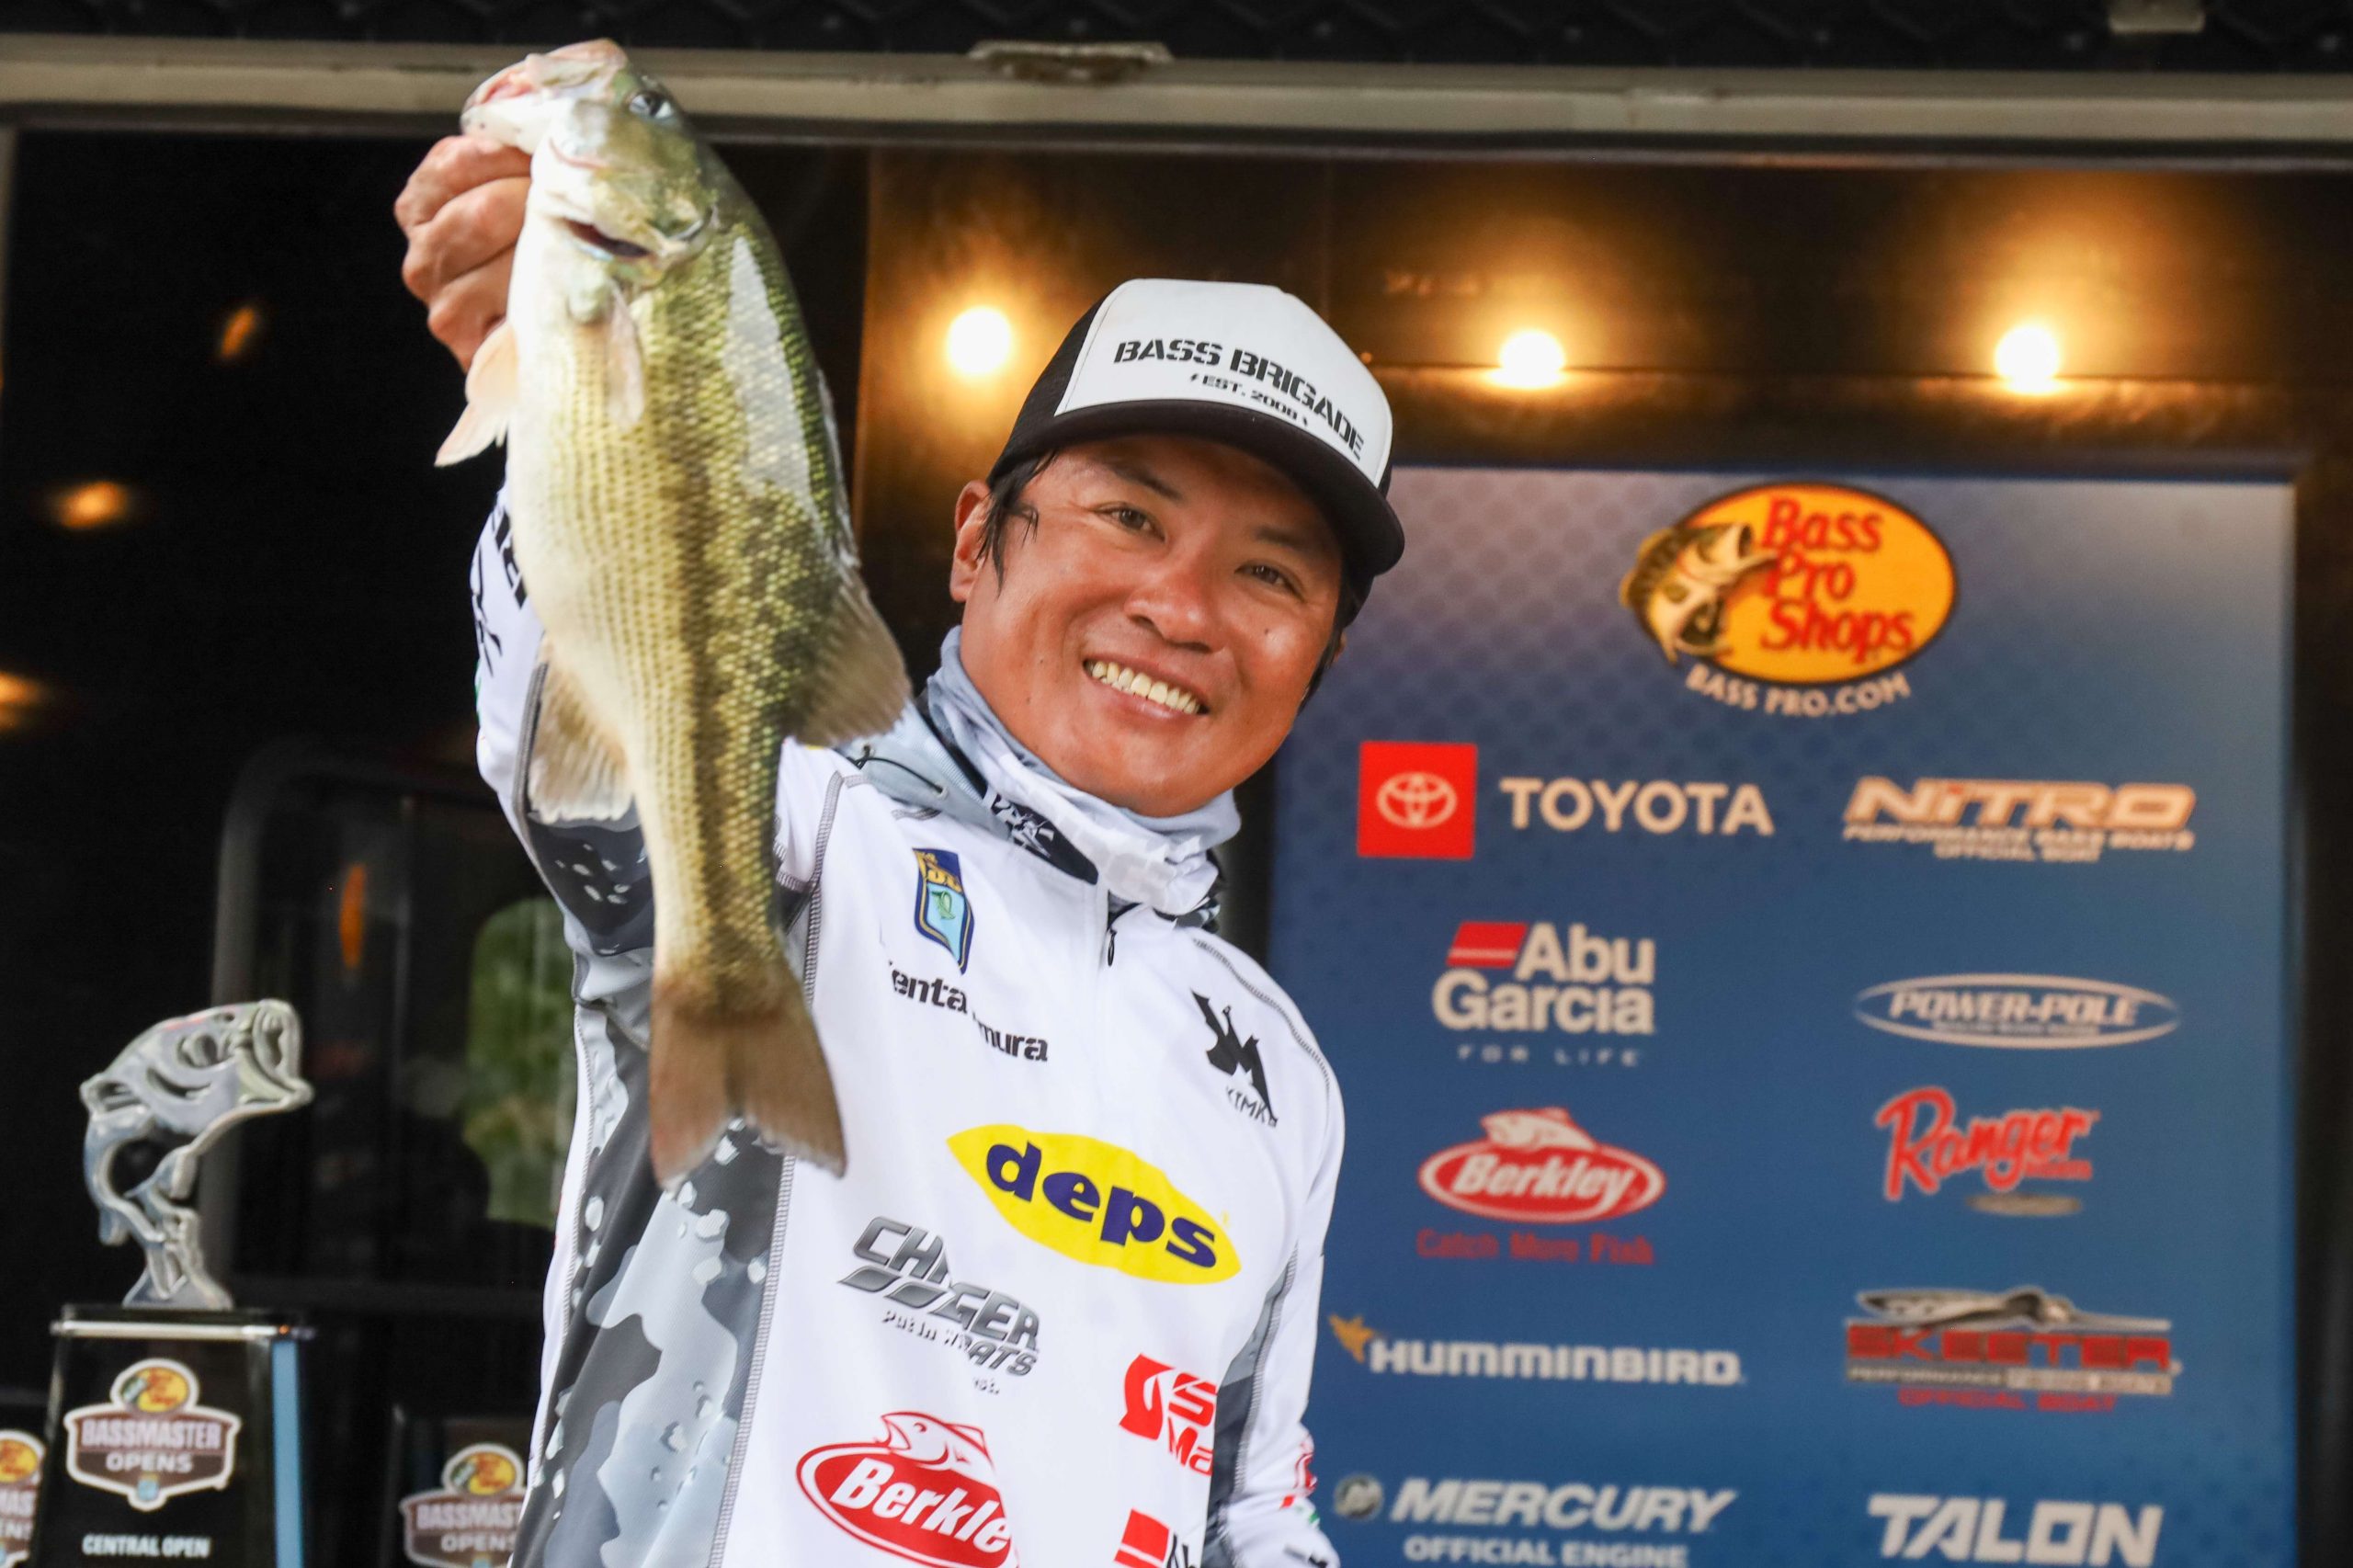 Kenta Kimura, 5th place, (31-1)